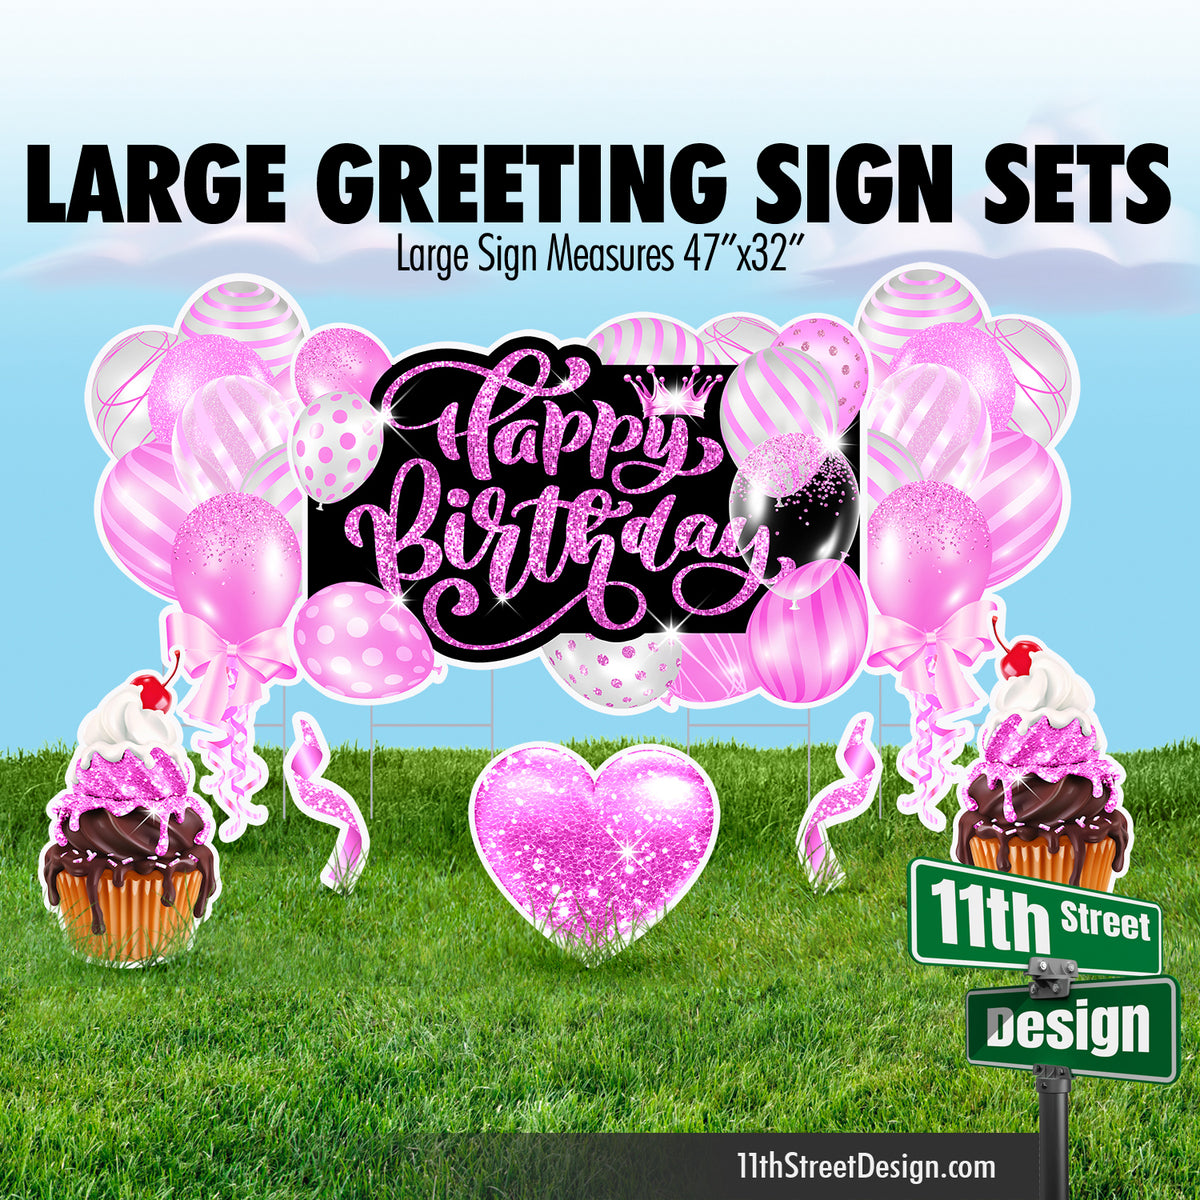 Happy Birthday Large Greeting Sign Flair Set - Pink